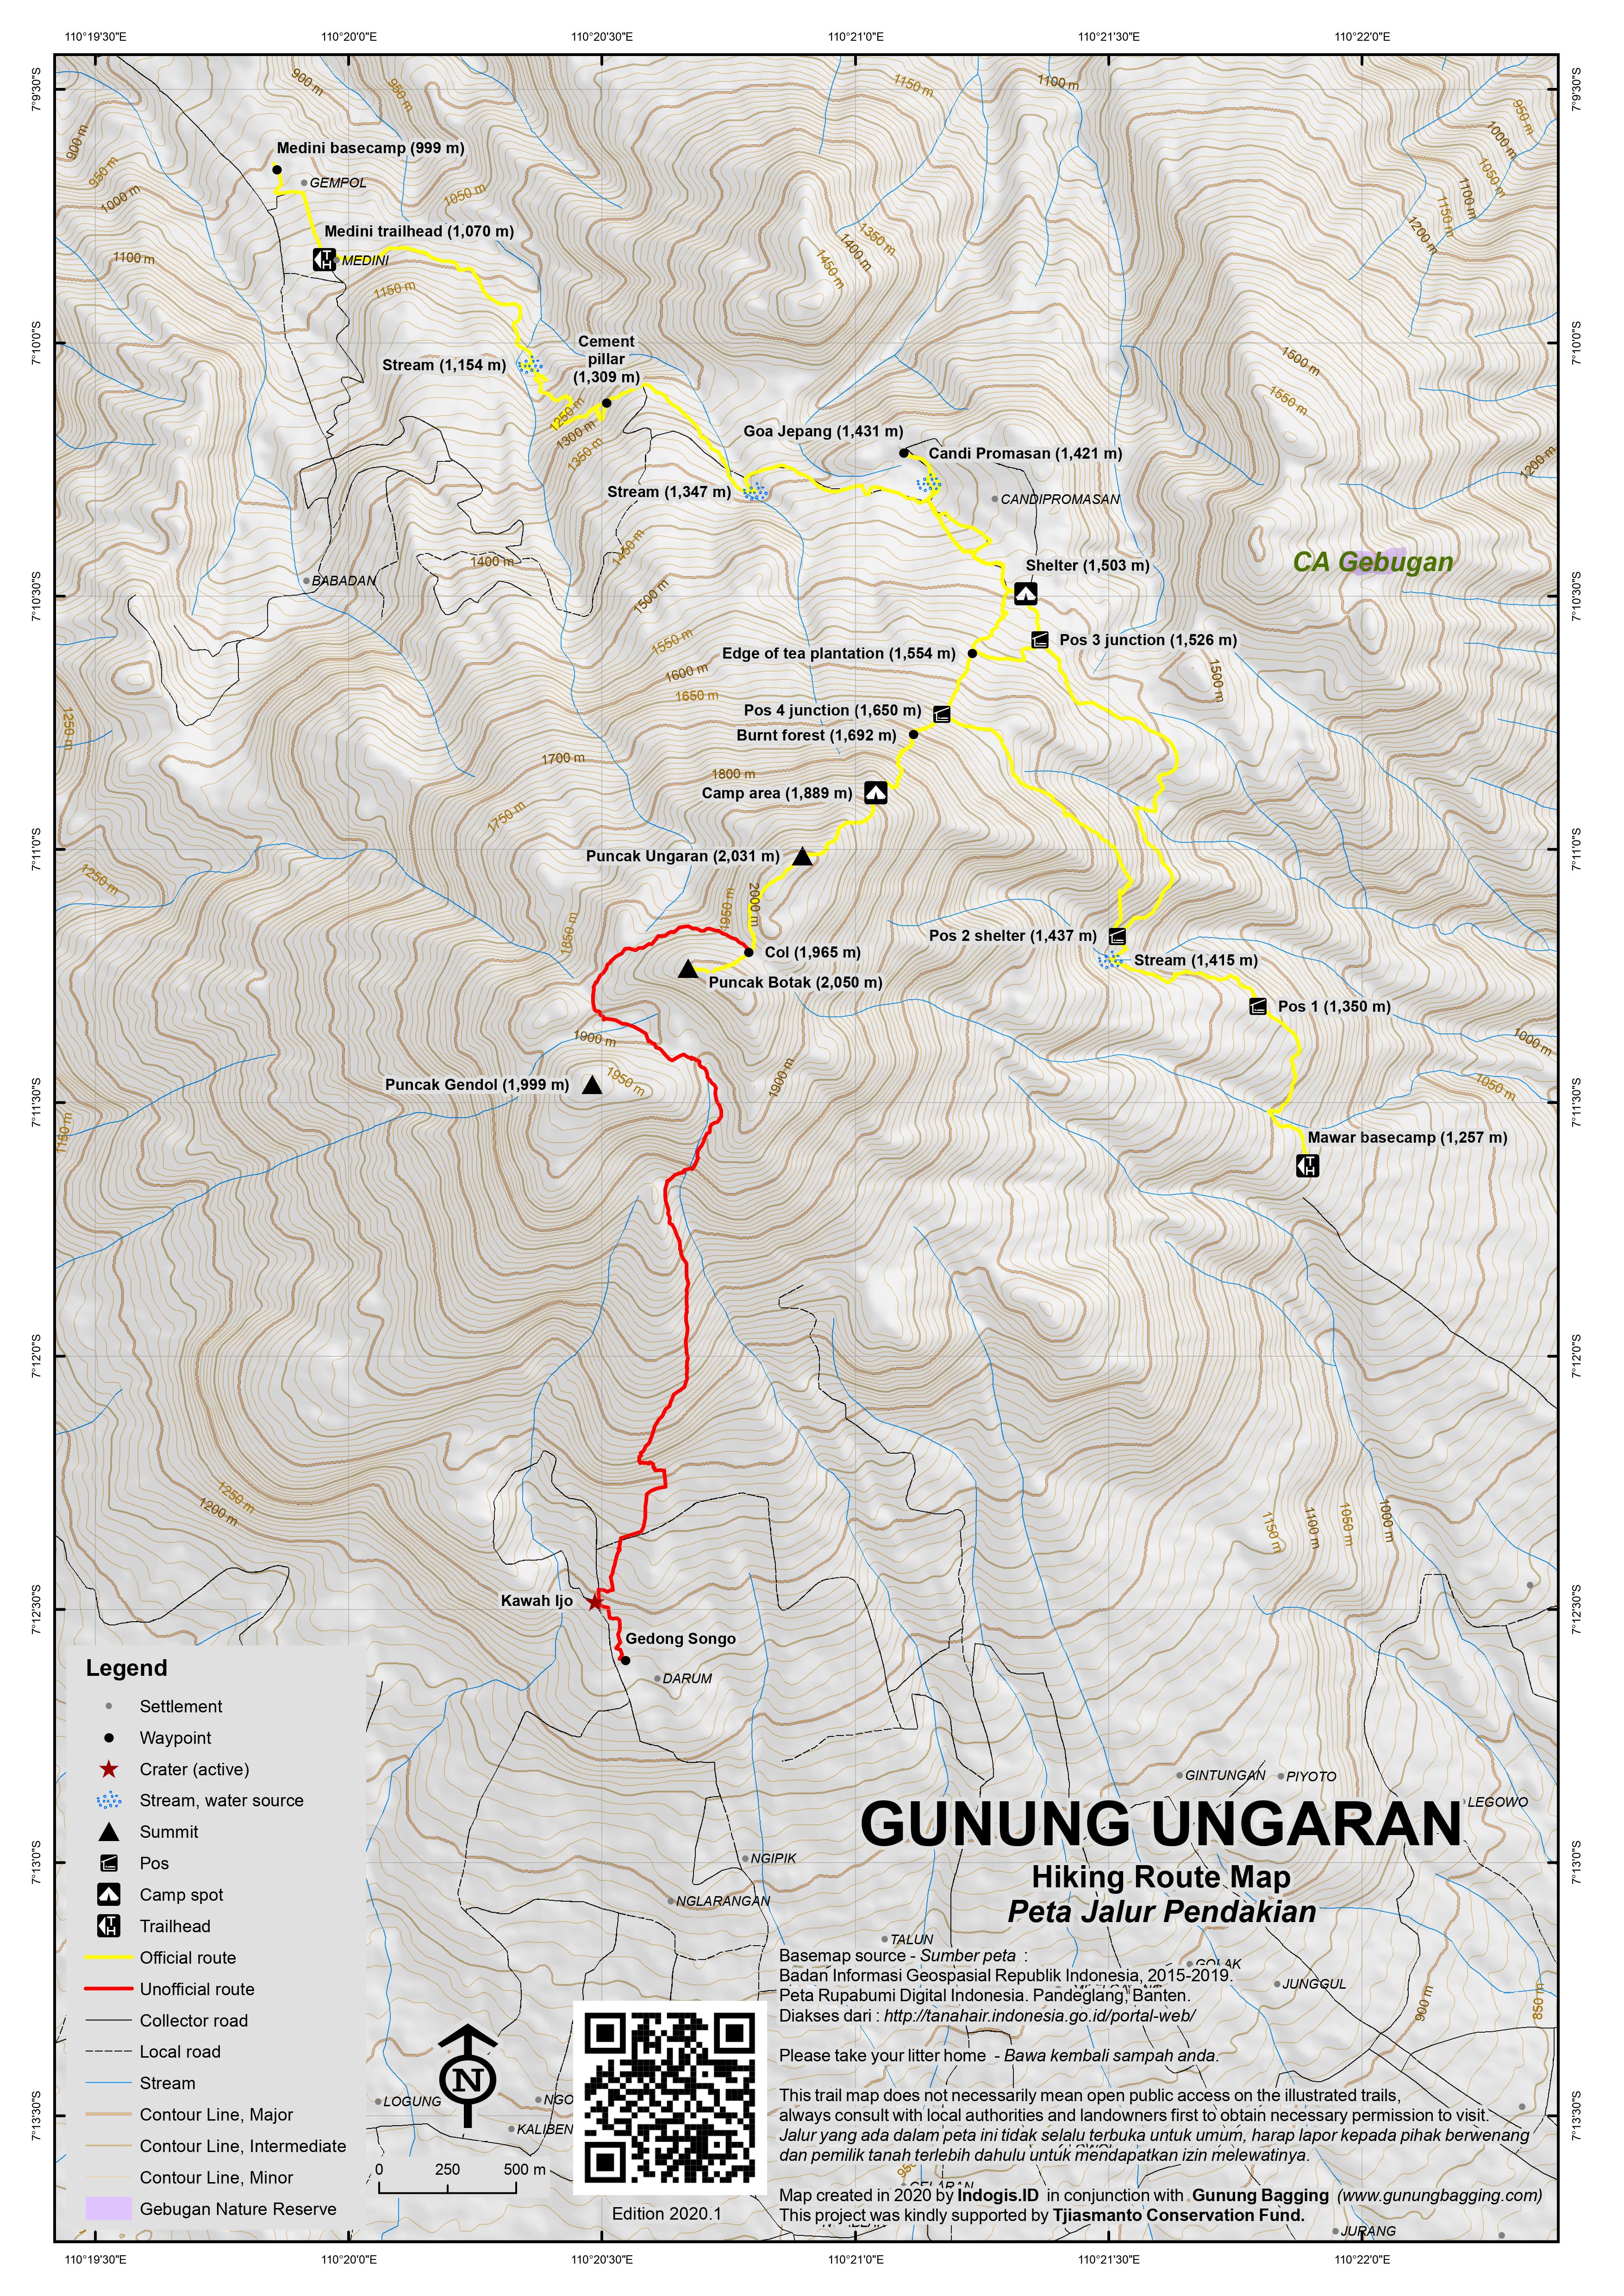 Peta Jalur Pendakian Gunung Ungaran